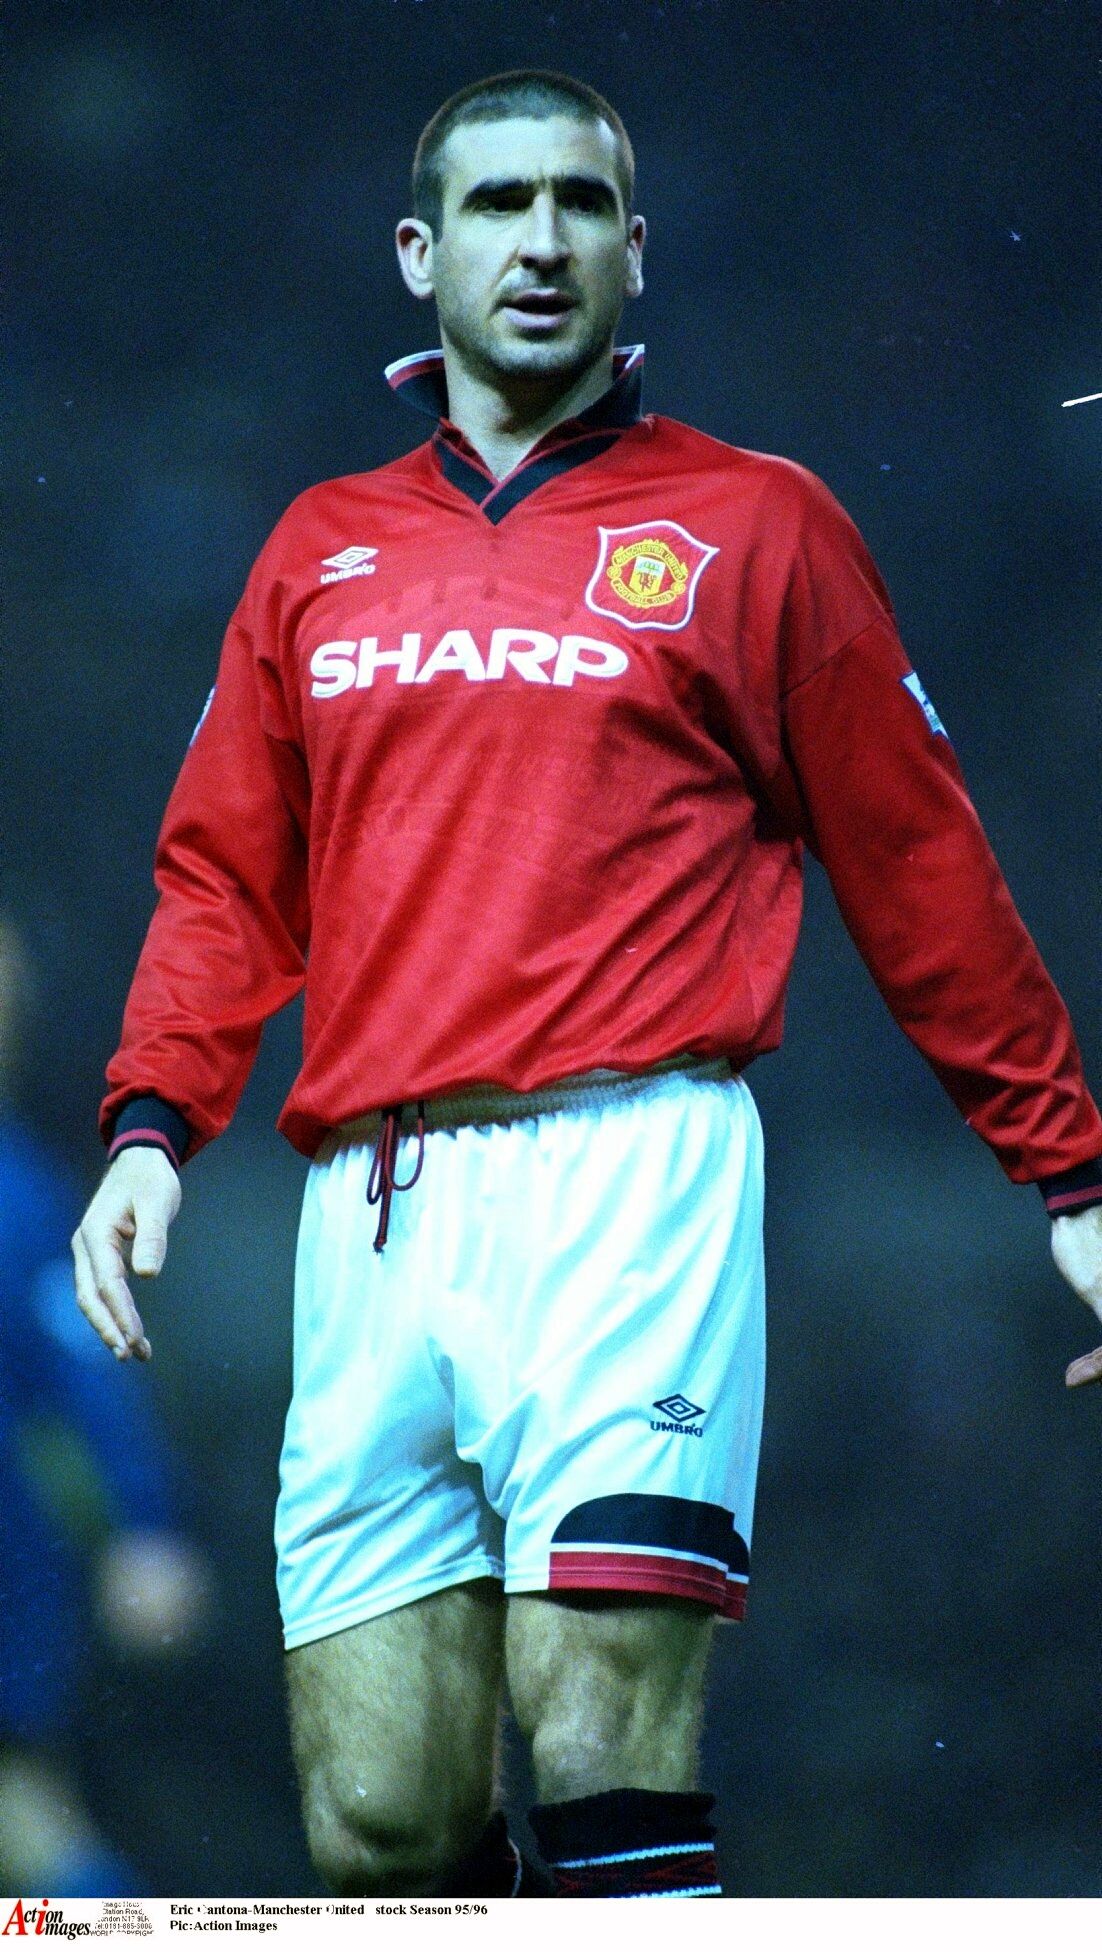 Eric Cantona at Manchester United